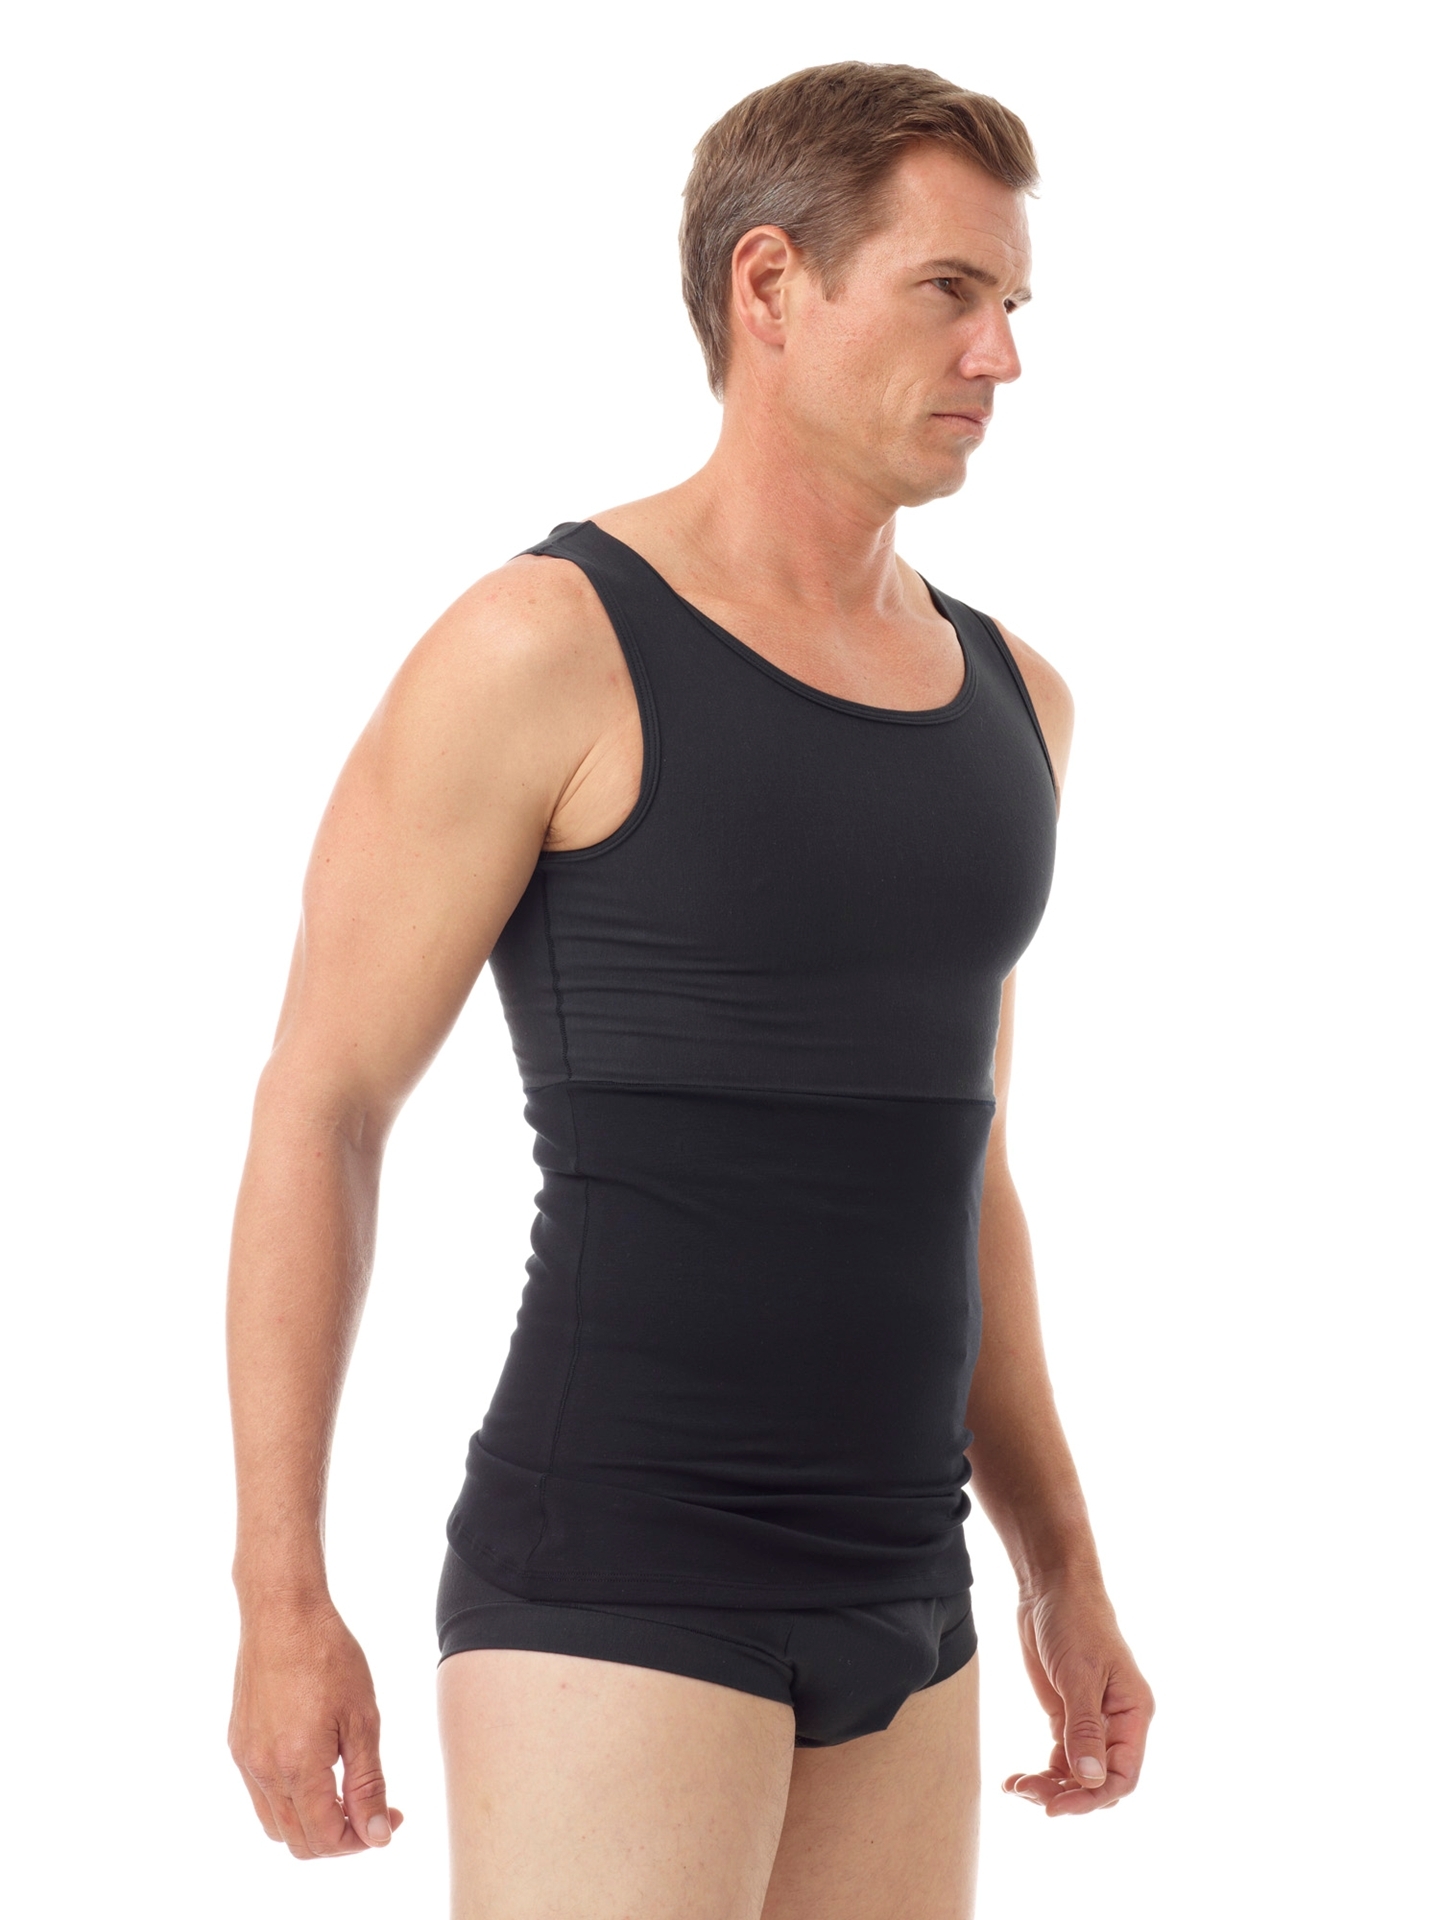 New Men Gynecomastia Compression Shirt Waist Trainer Slimming Underwear  Body Shaper Belly Control Slim Undershirt Posture Fitness 